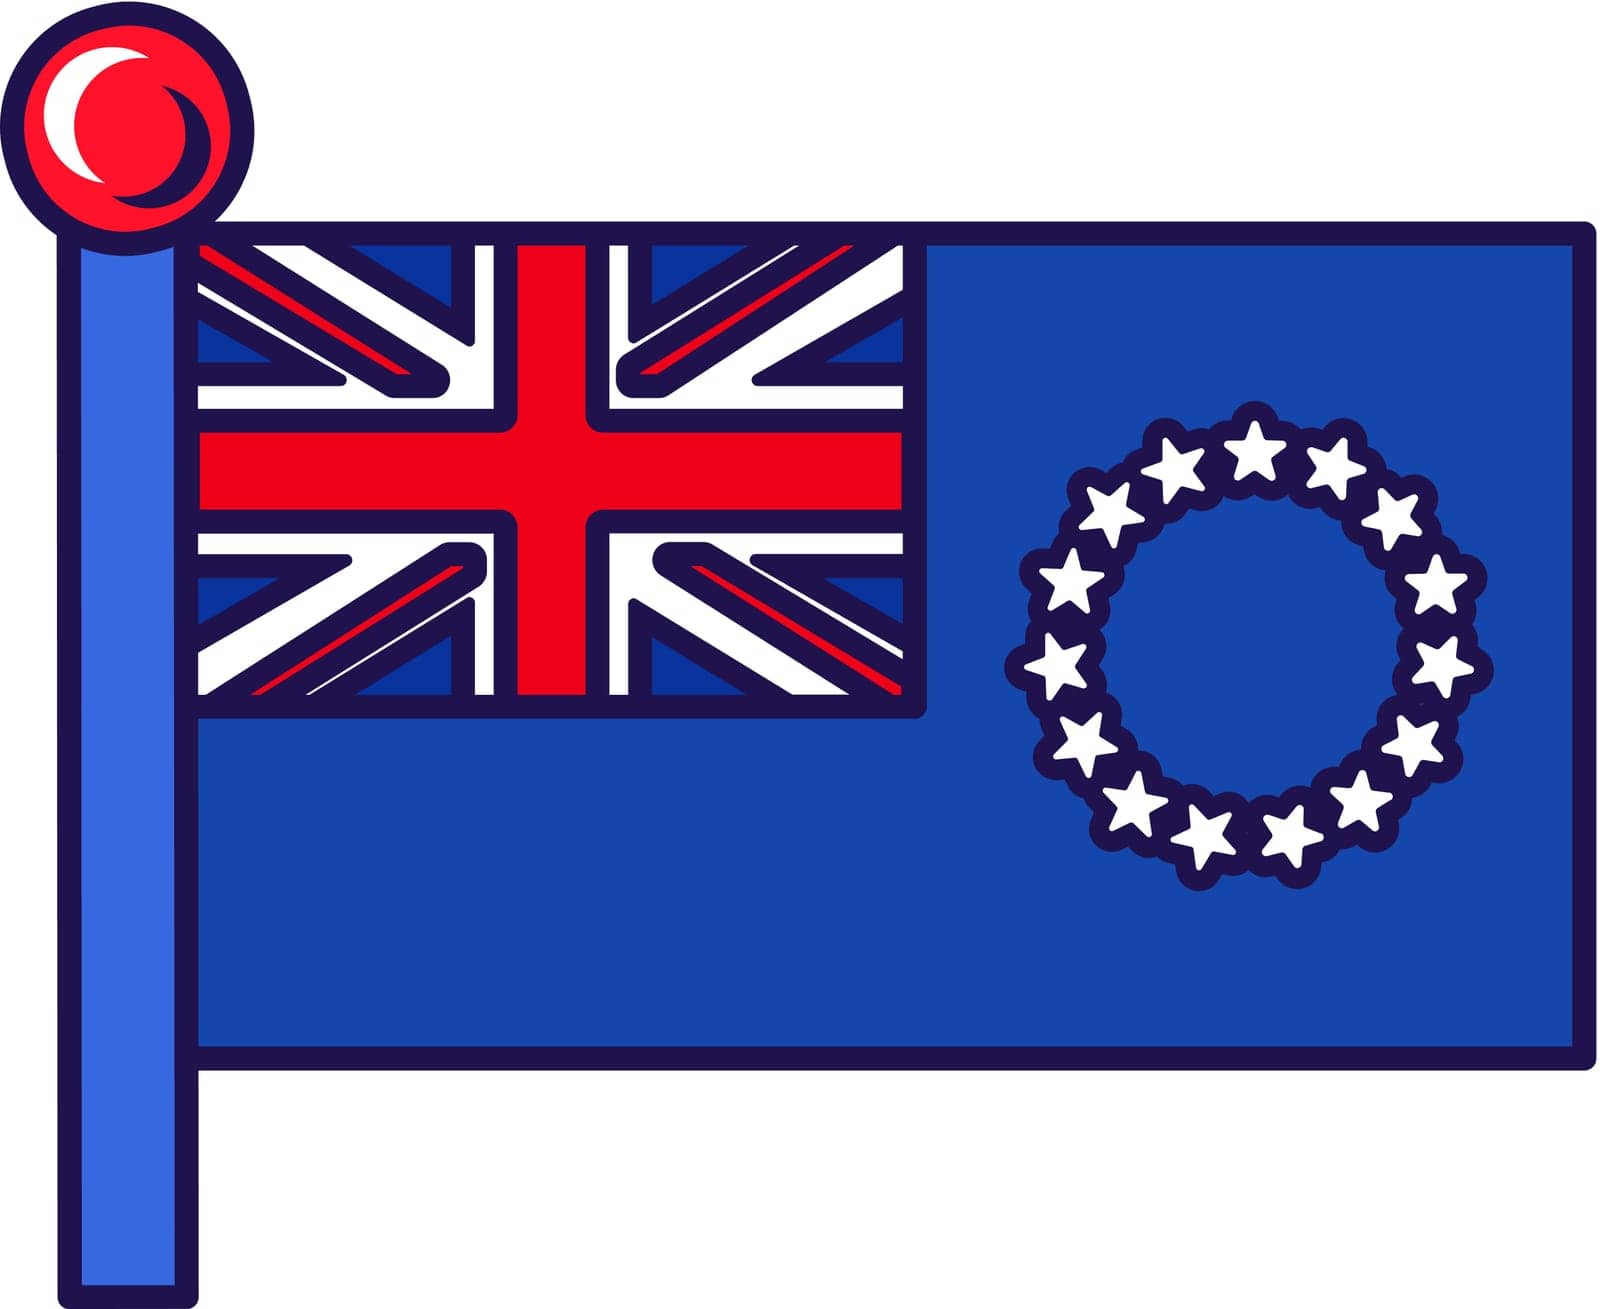 Cook island ensign civil flag on flagstaff vector by barsrsind